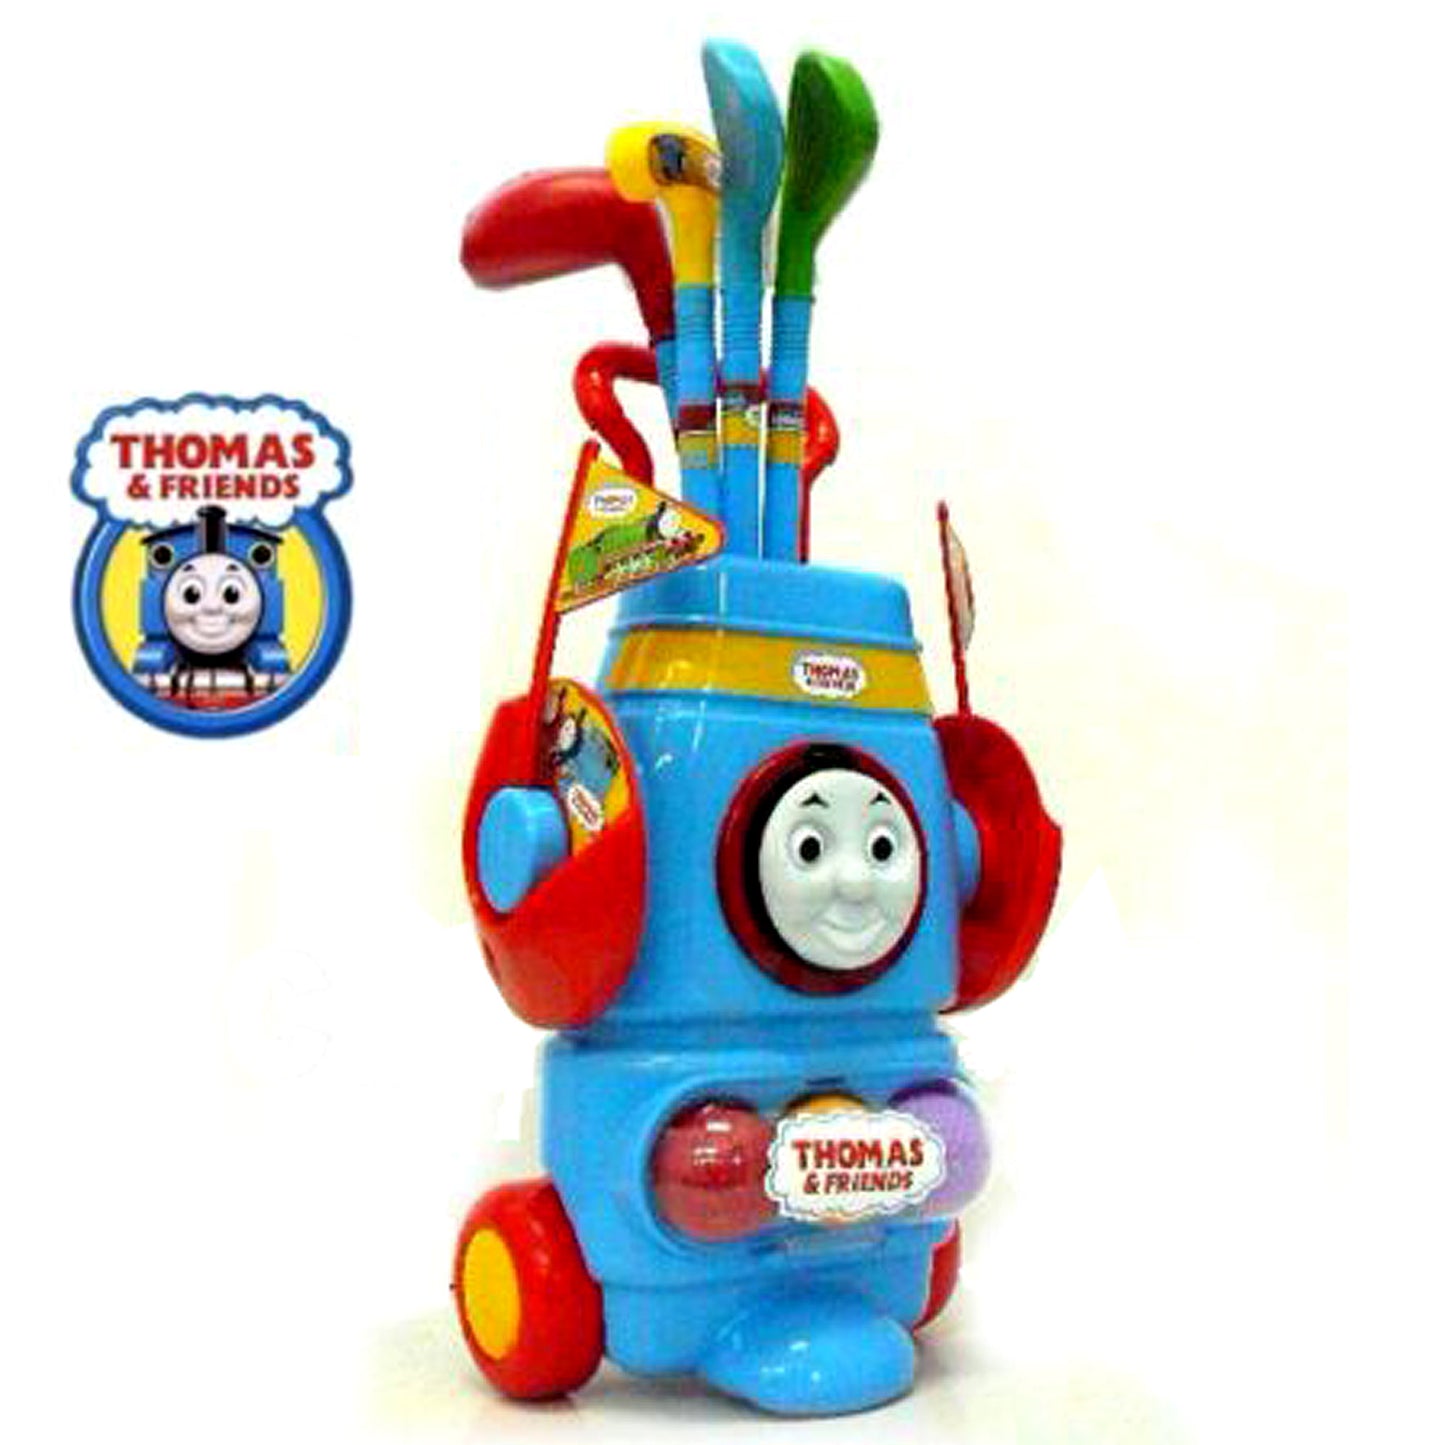 Thomas the Tank Kids Mini Golf Toy Club & Cart Set 3+